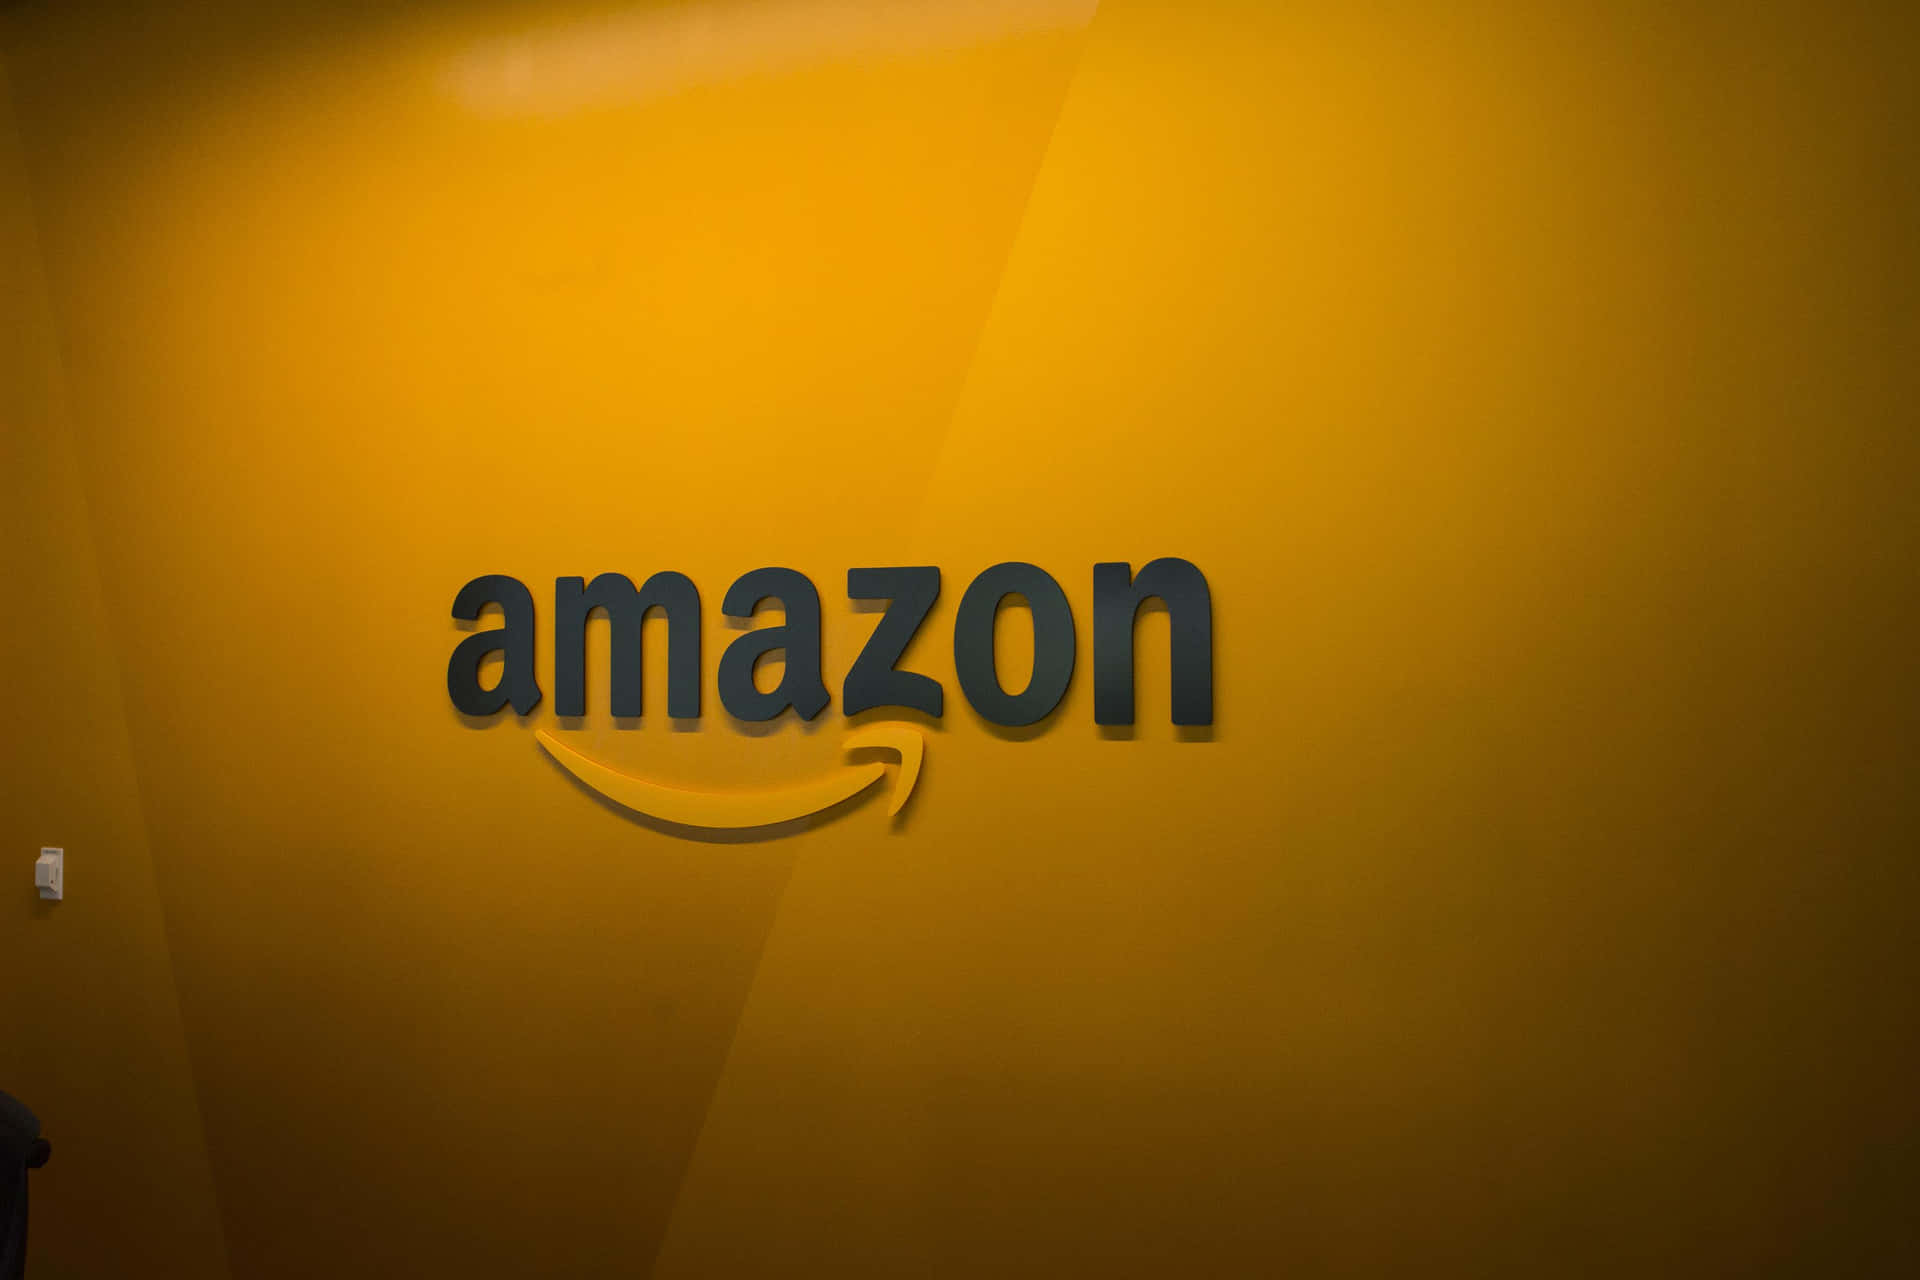 Download Amazon Uk Logo In Yellow-orange Wall Wallpaper | Wallpapers.com